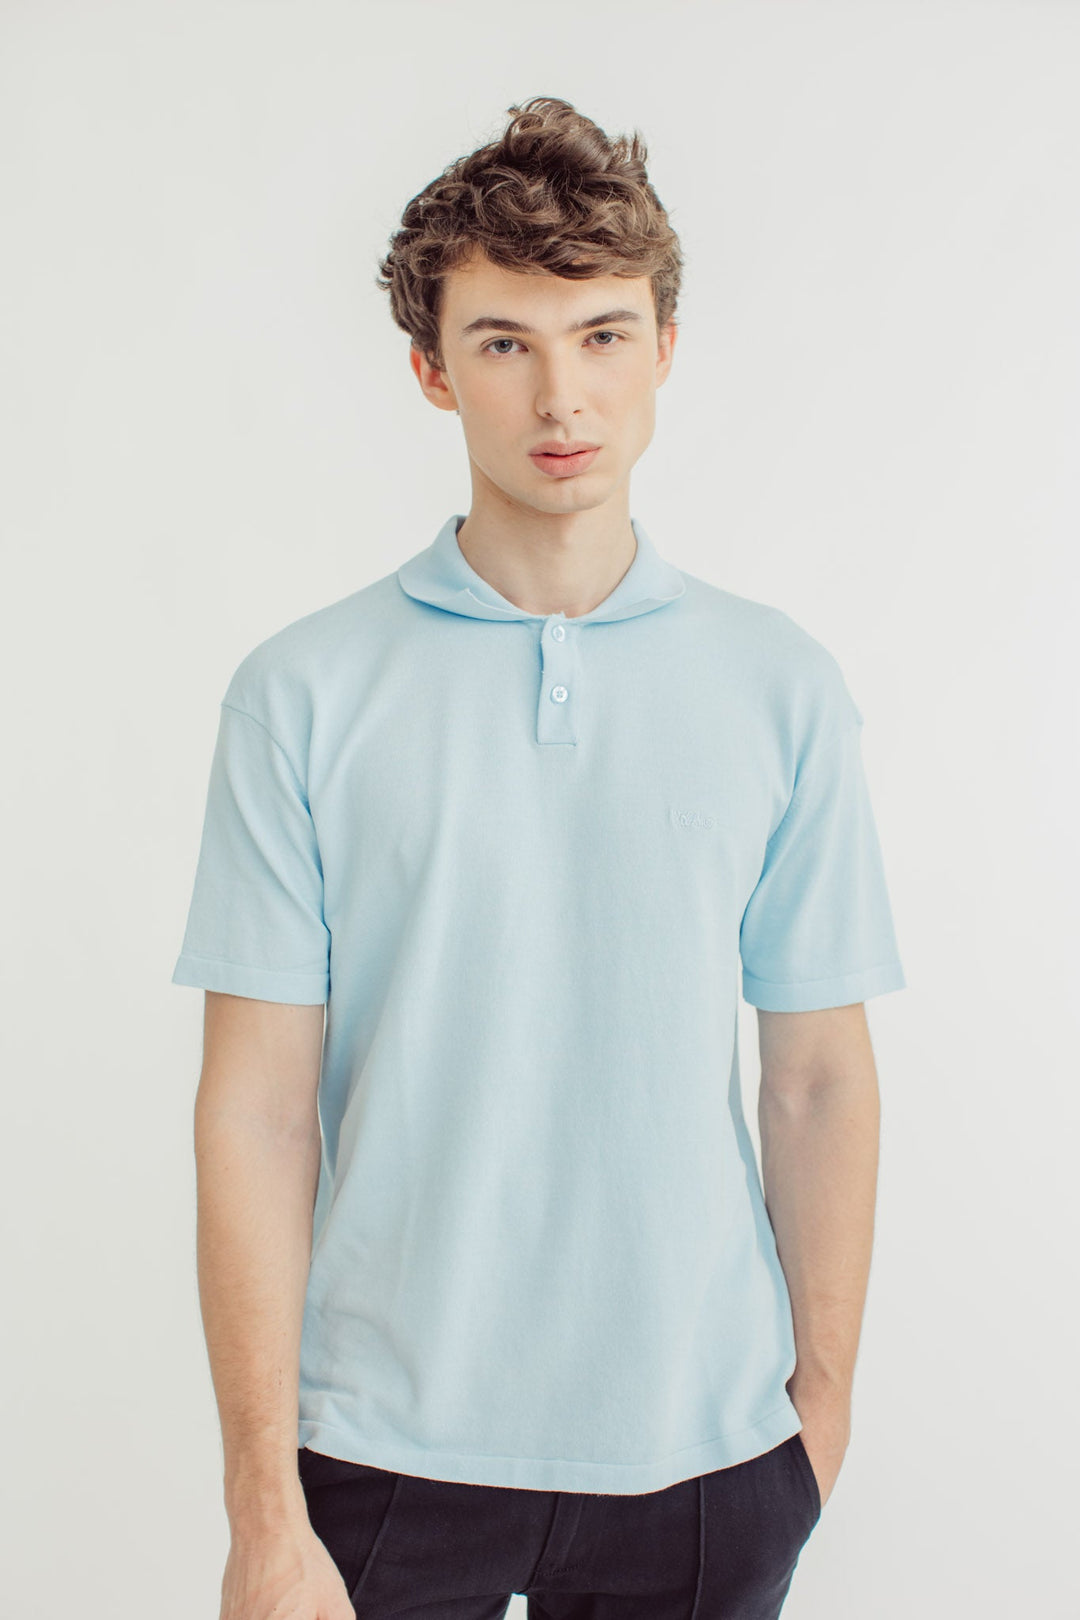 Joshua Flat Knit Polo Shirt with Embroidery - Mossimo PH